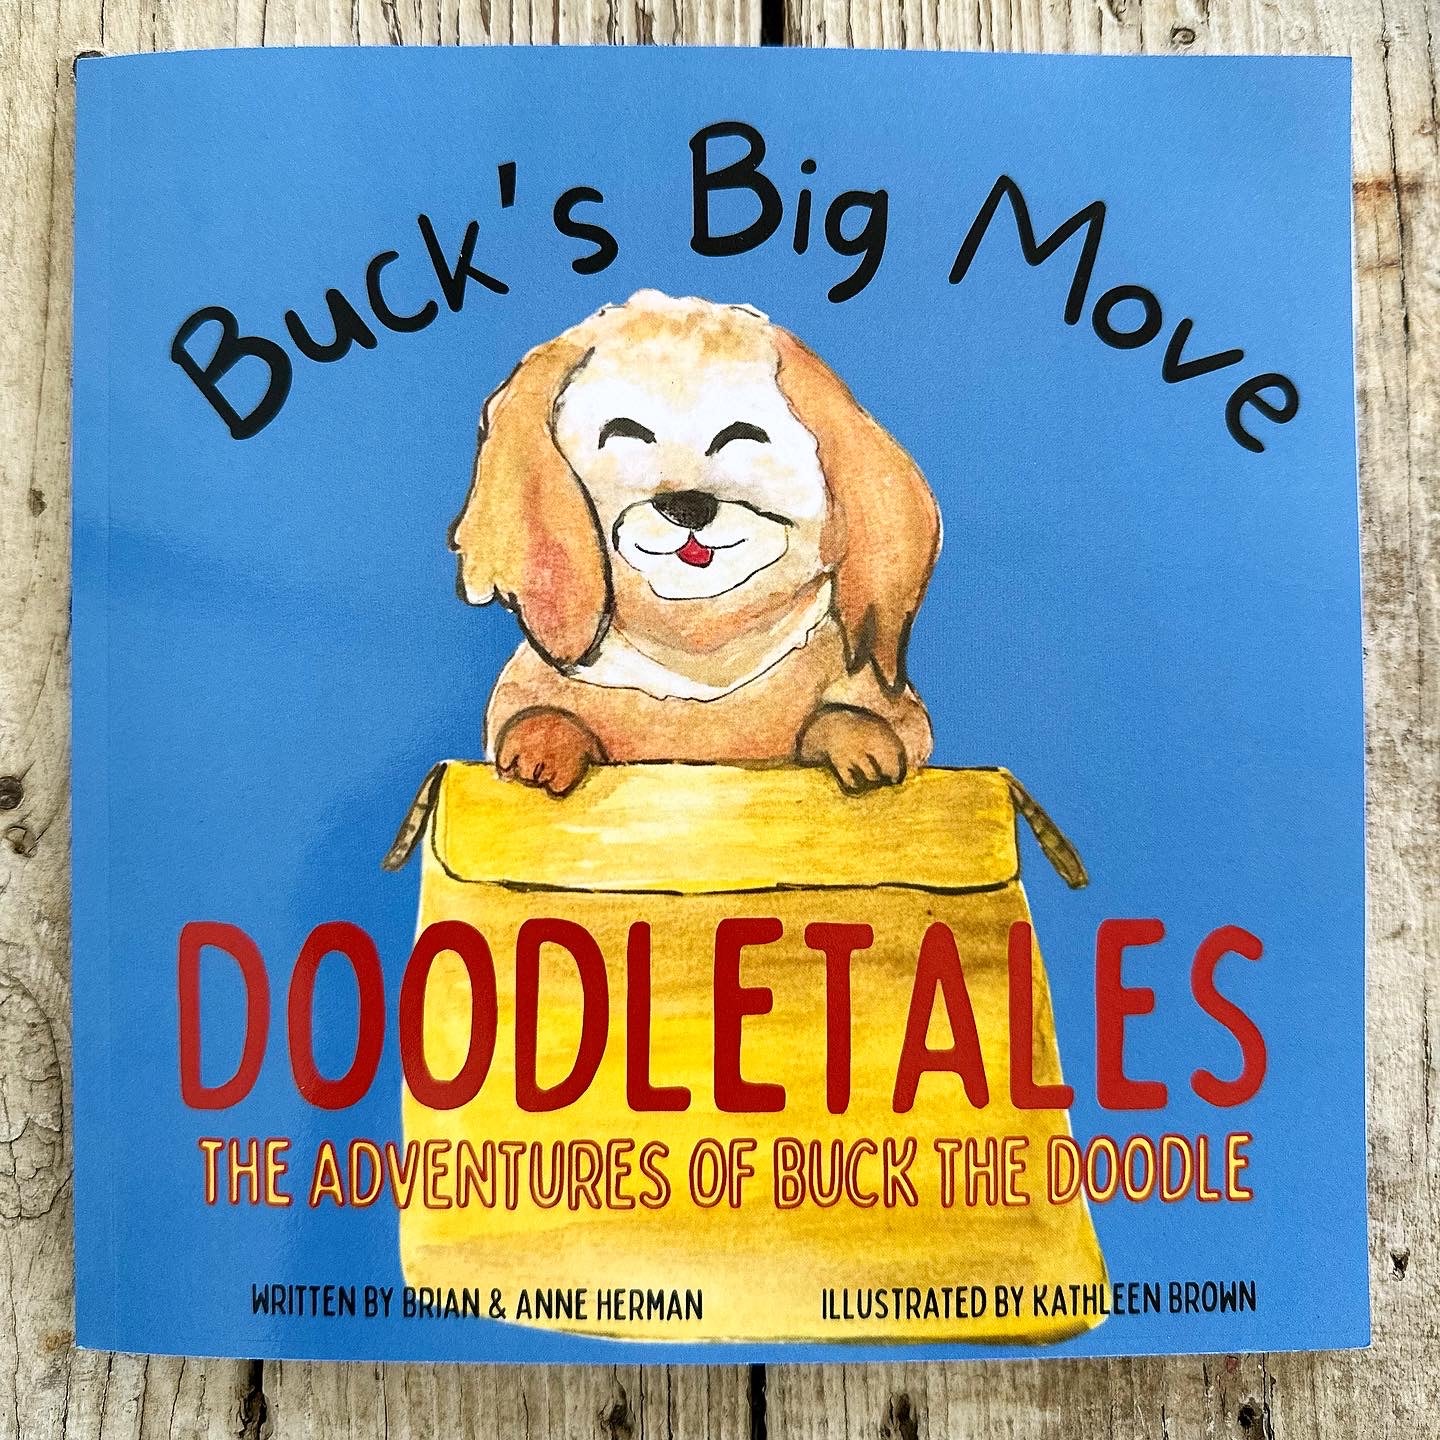 Buck's Big Move